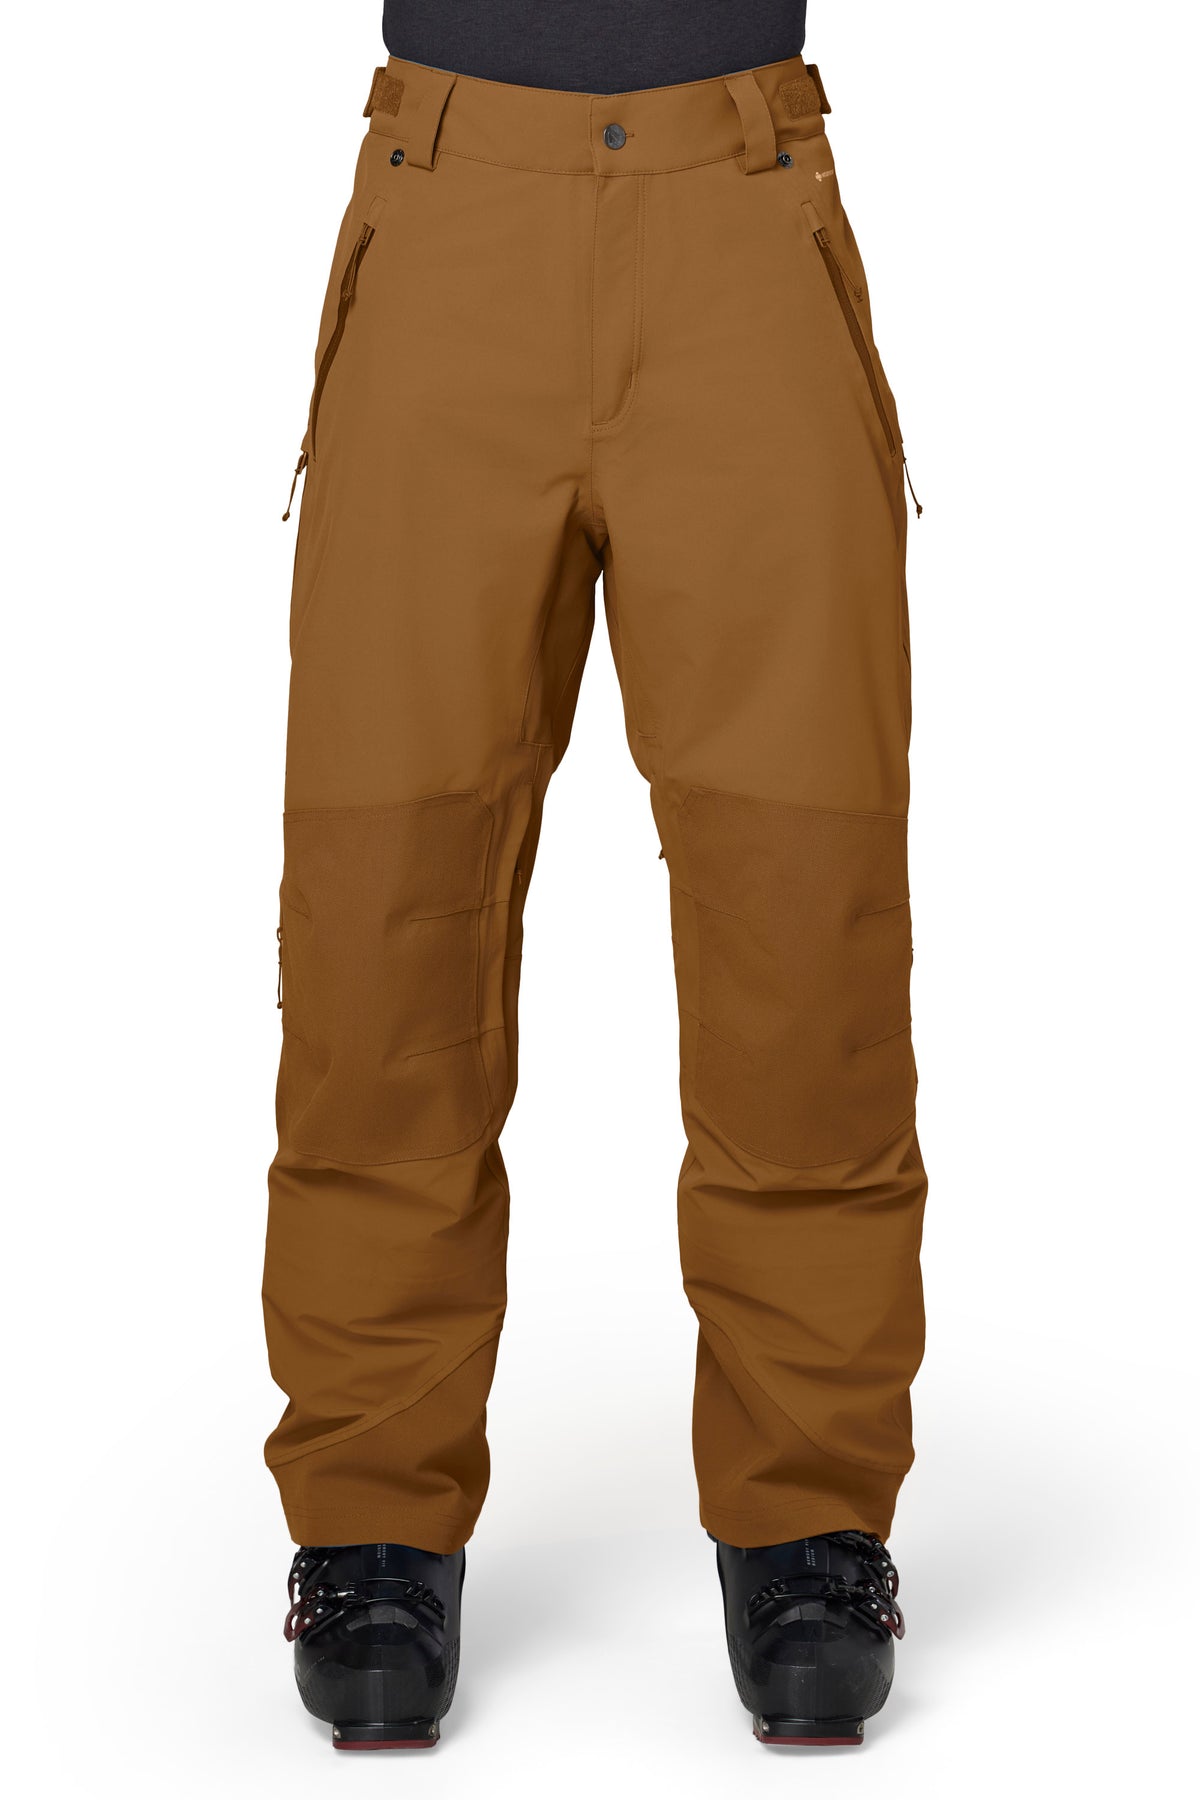 Staydry Night Pants (Sizes Small, Medium, Large, Xl) - XL